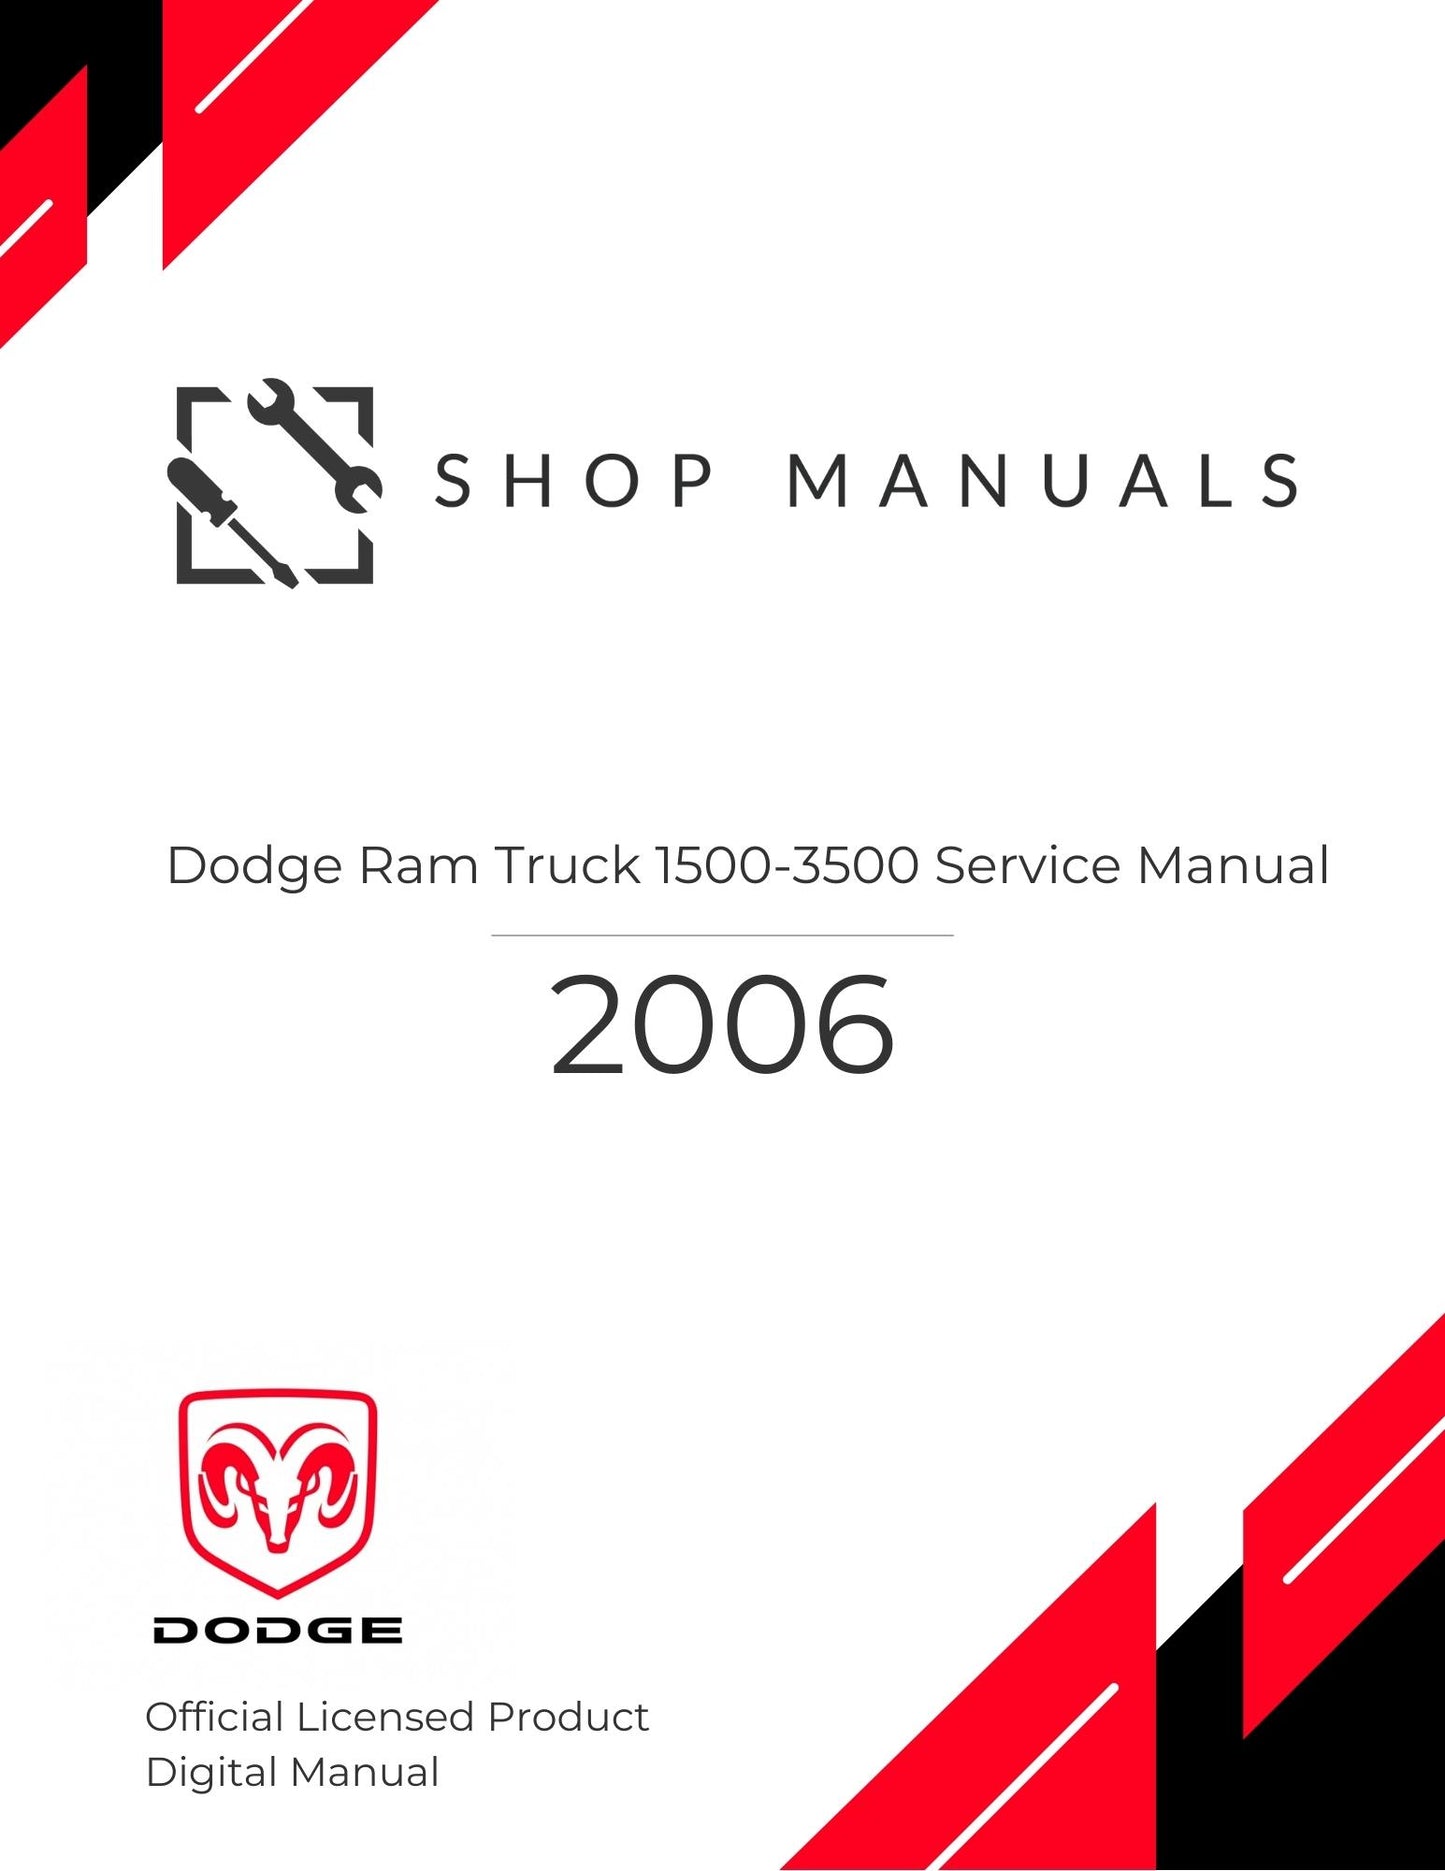 2006 Dodge Ram Truck 1500-3500 Service Manual